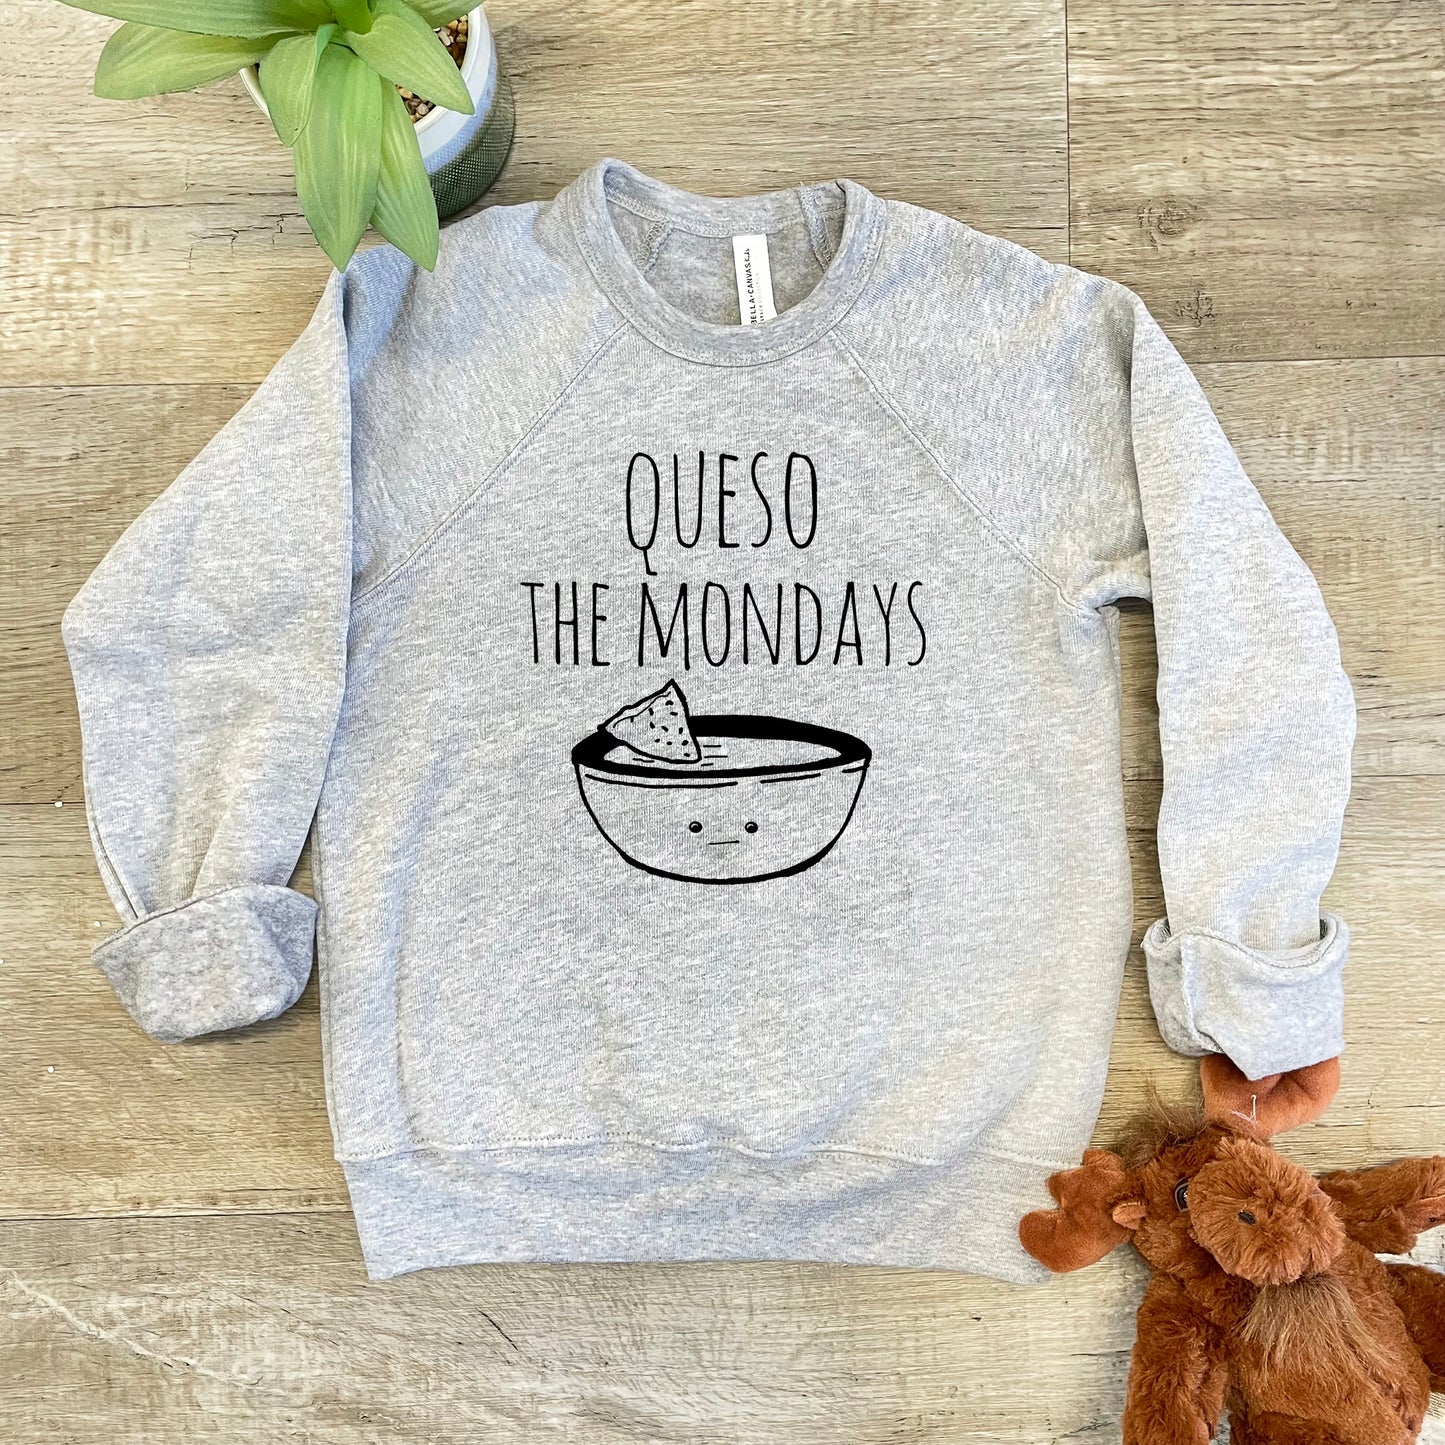 Queso The Mondays (Tacos) - Kid's Sweatshirt - Heather Gray or Mauve